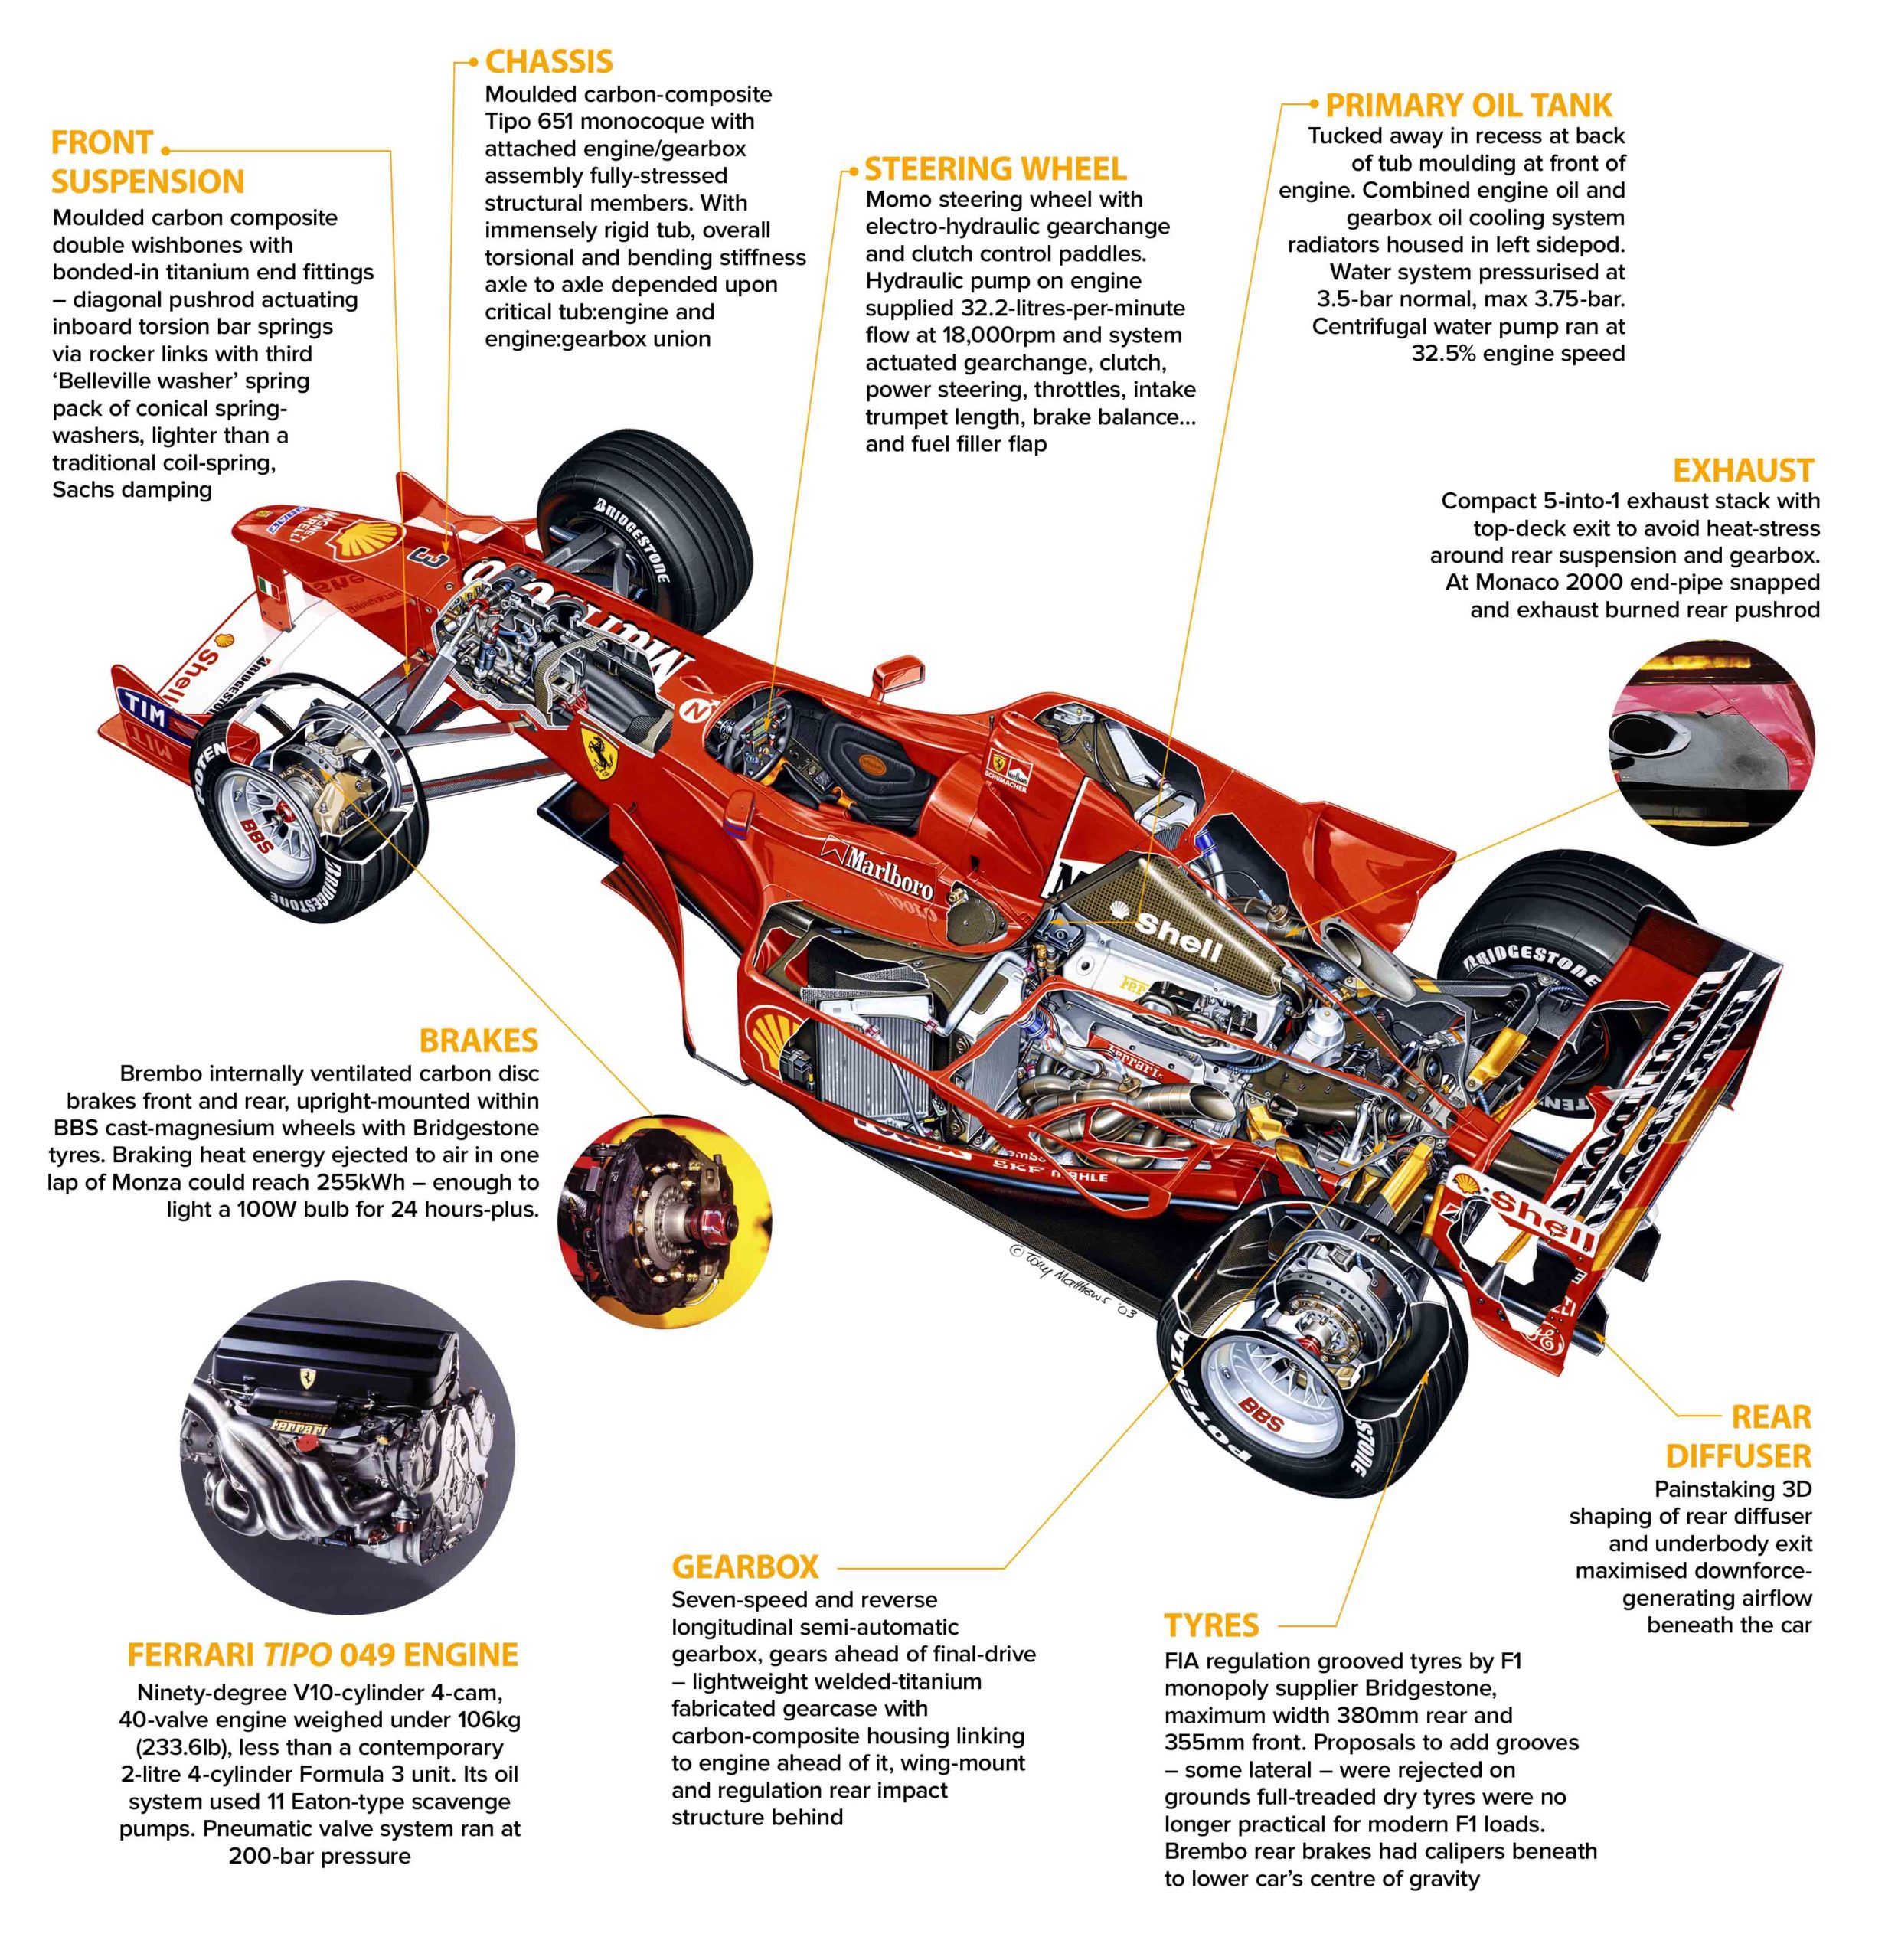 Ferrari F2000 graphic